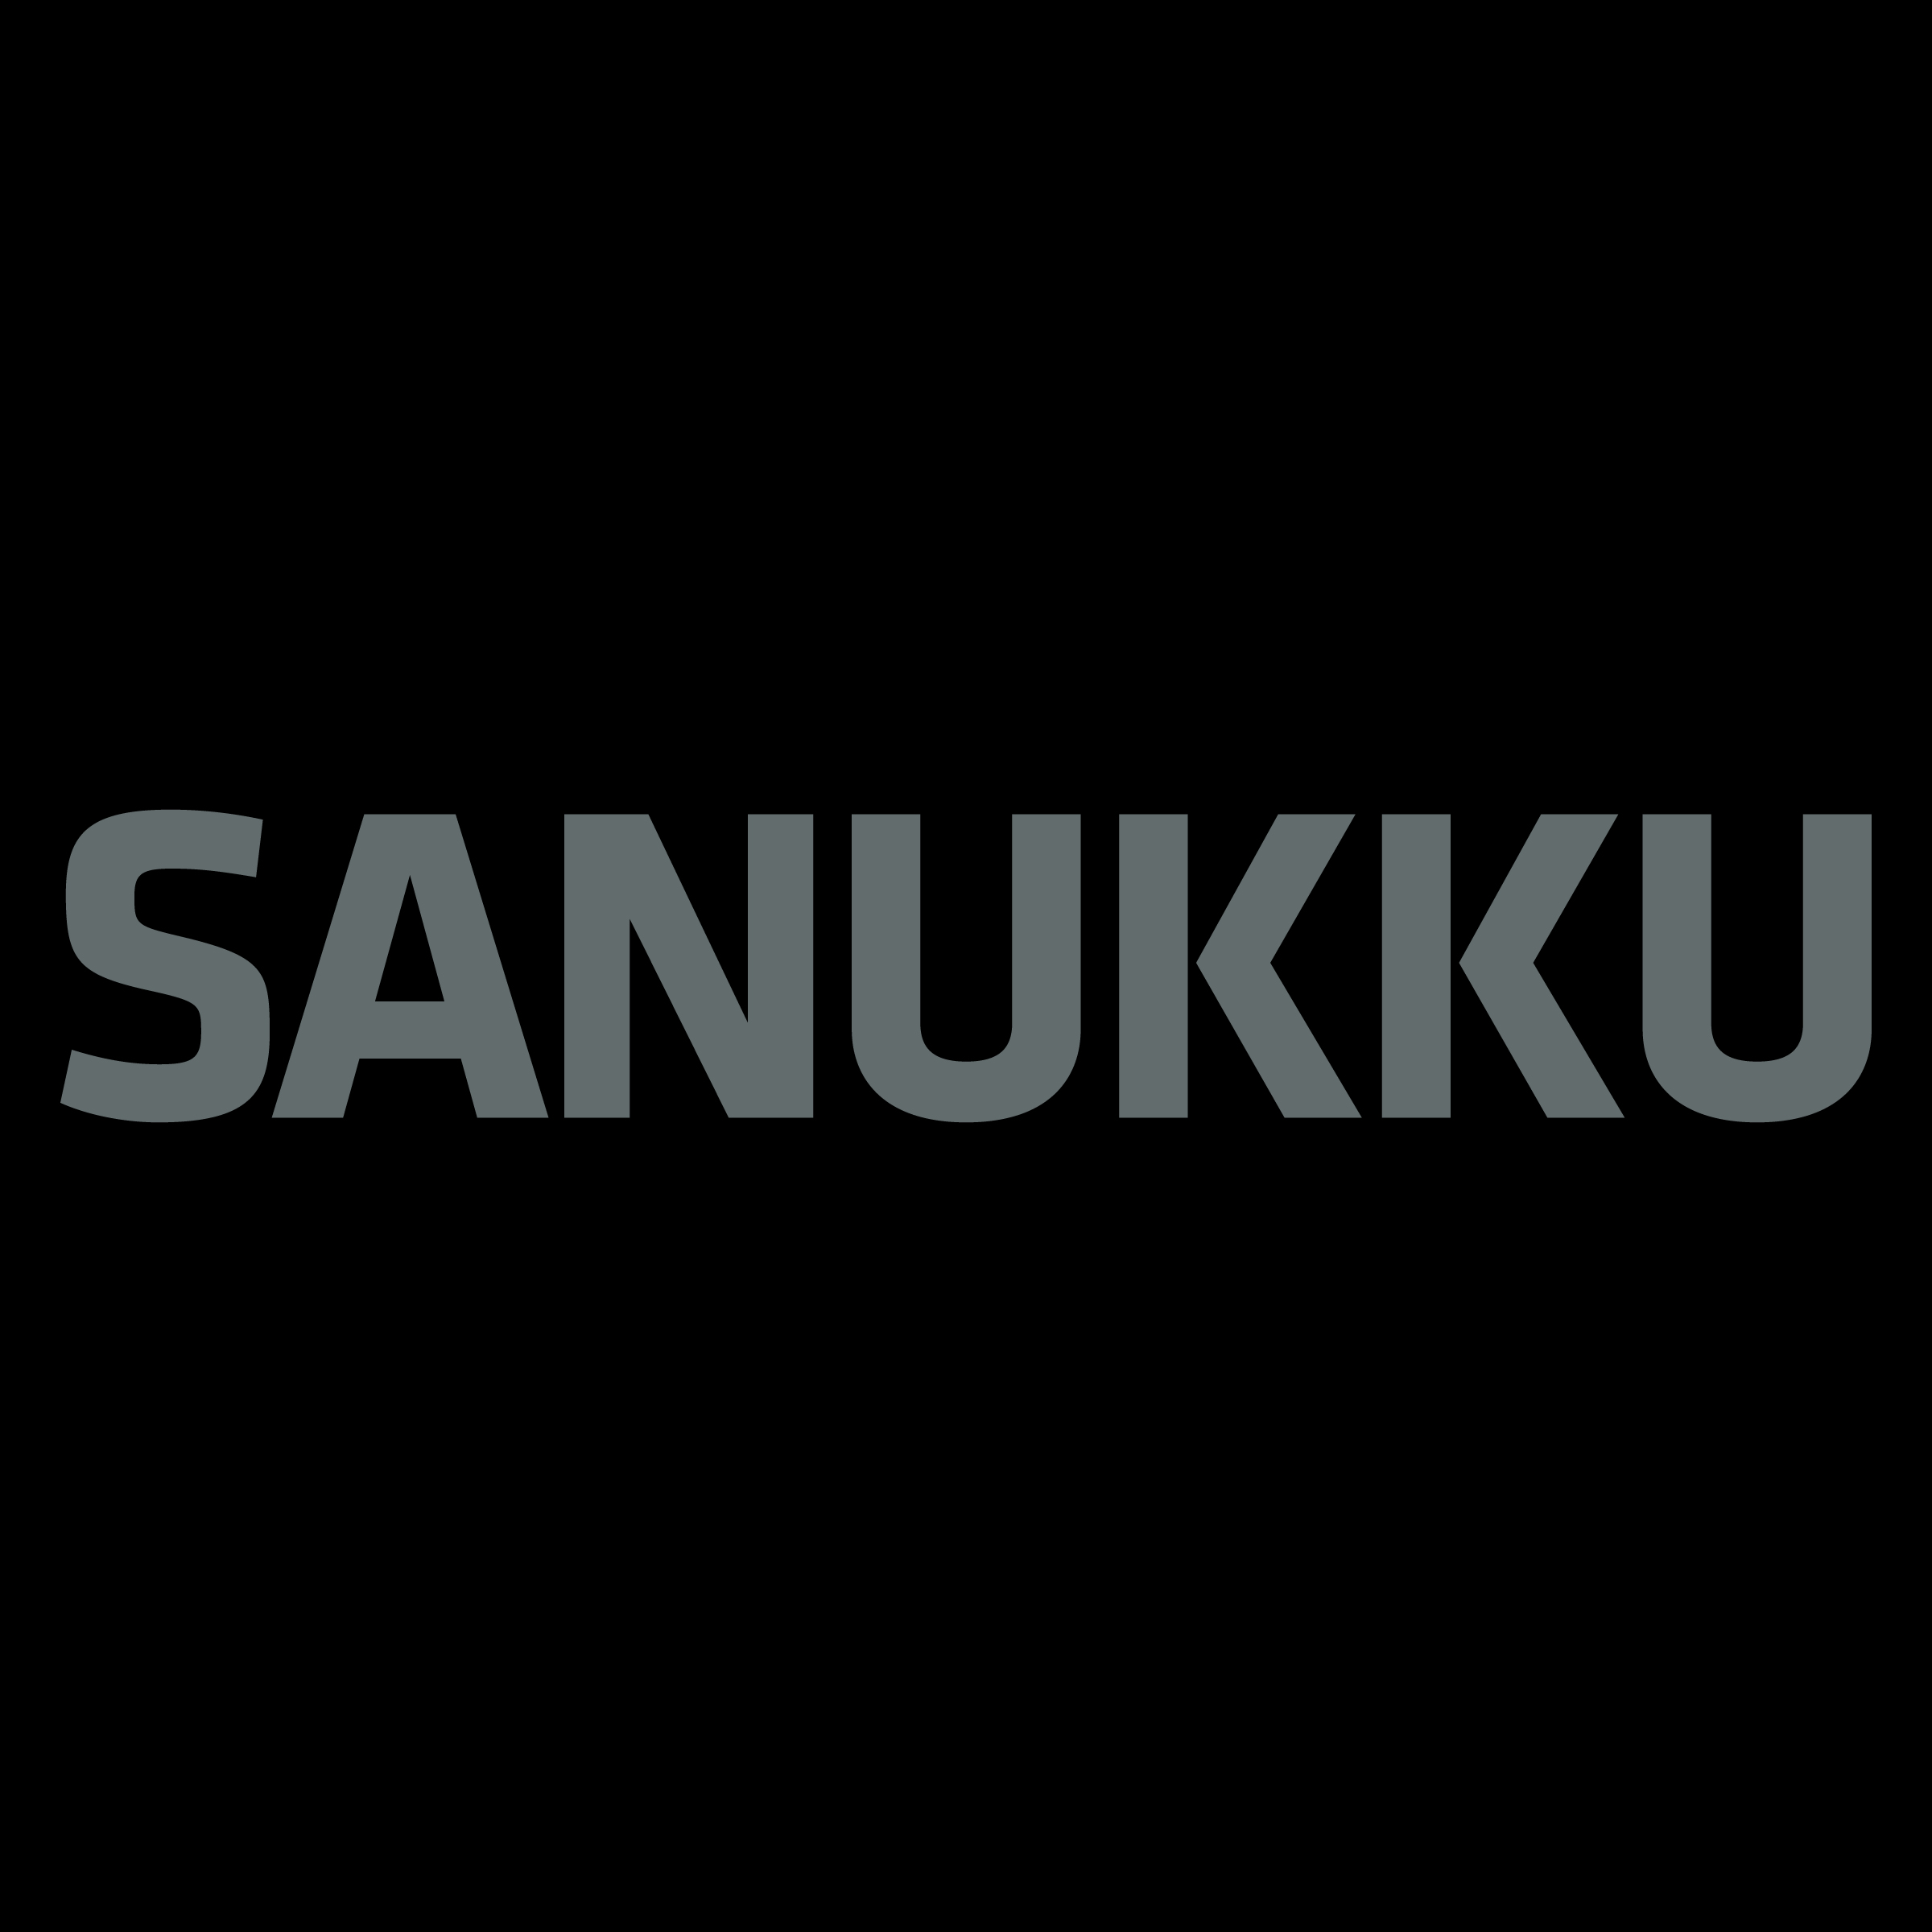 SANUKKUのロゴ